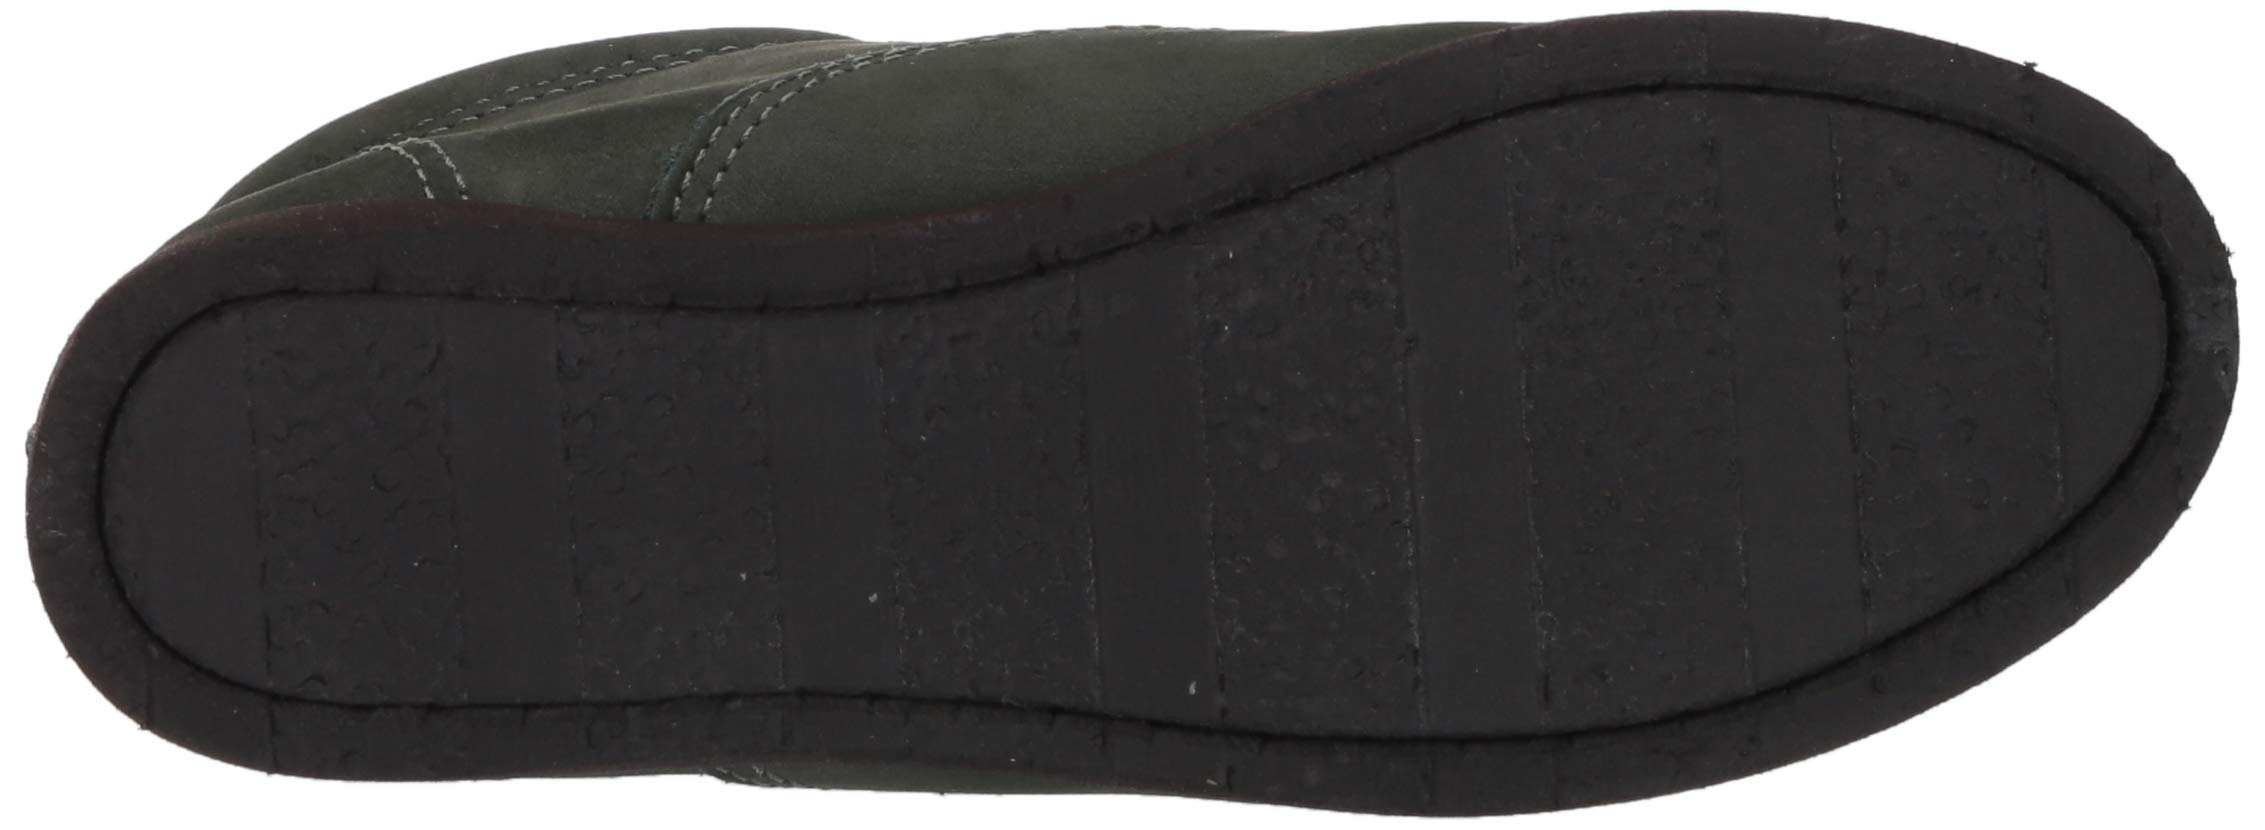 Marc Joseph New York Unisex-Child Leather Made in Brazil Lightweight Chukka Ankle Boot